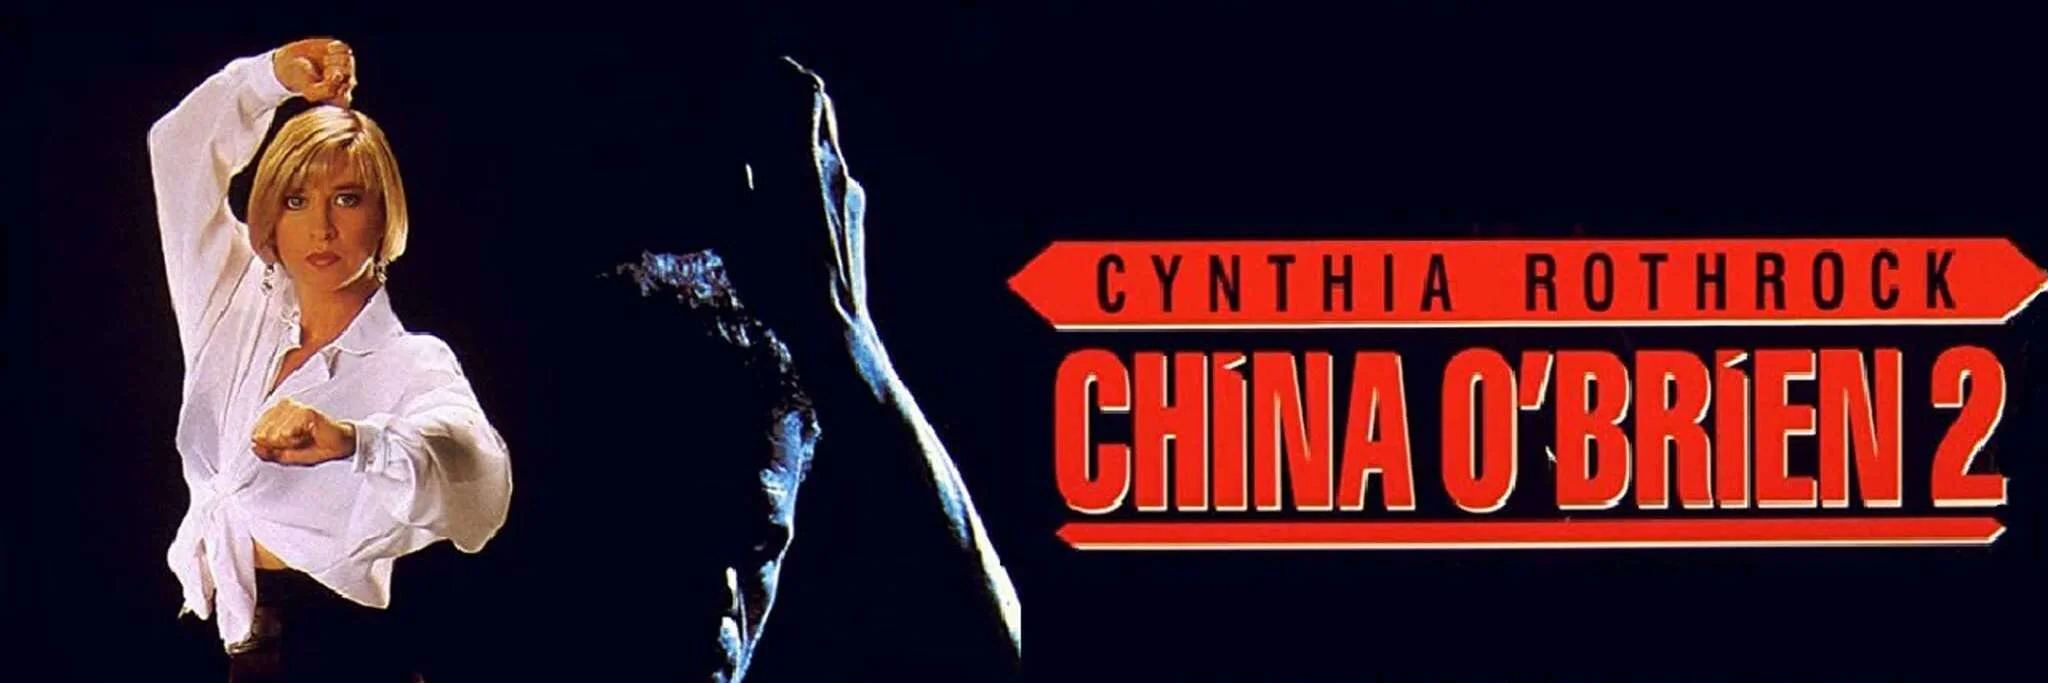 China O'Brien II 4K 1991 big poster